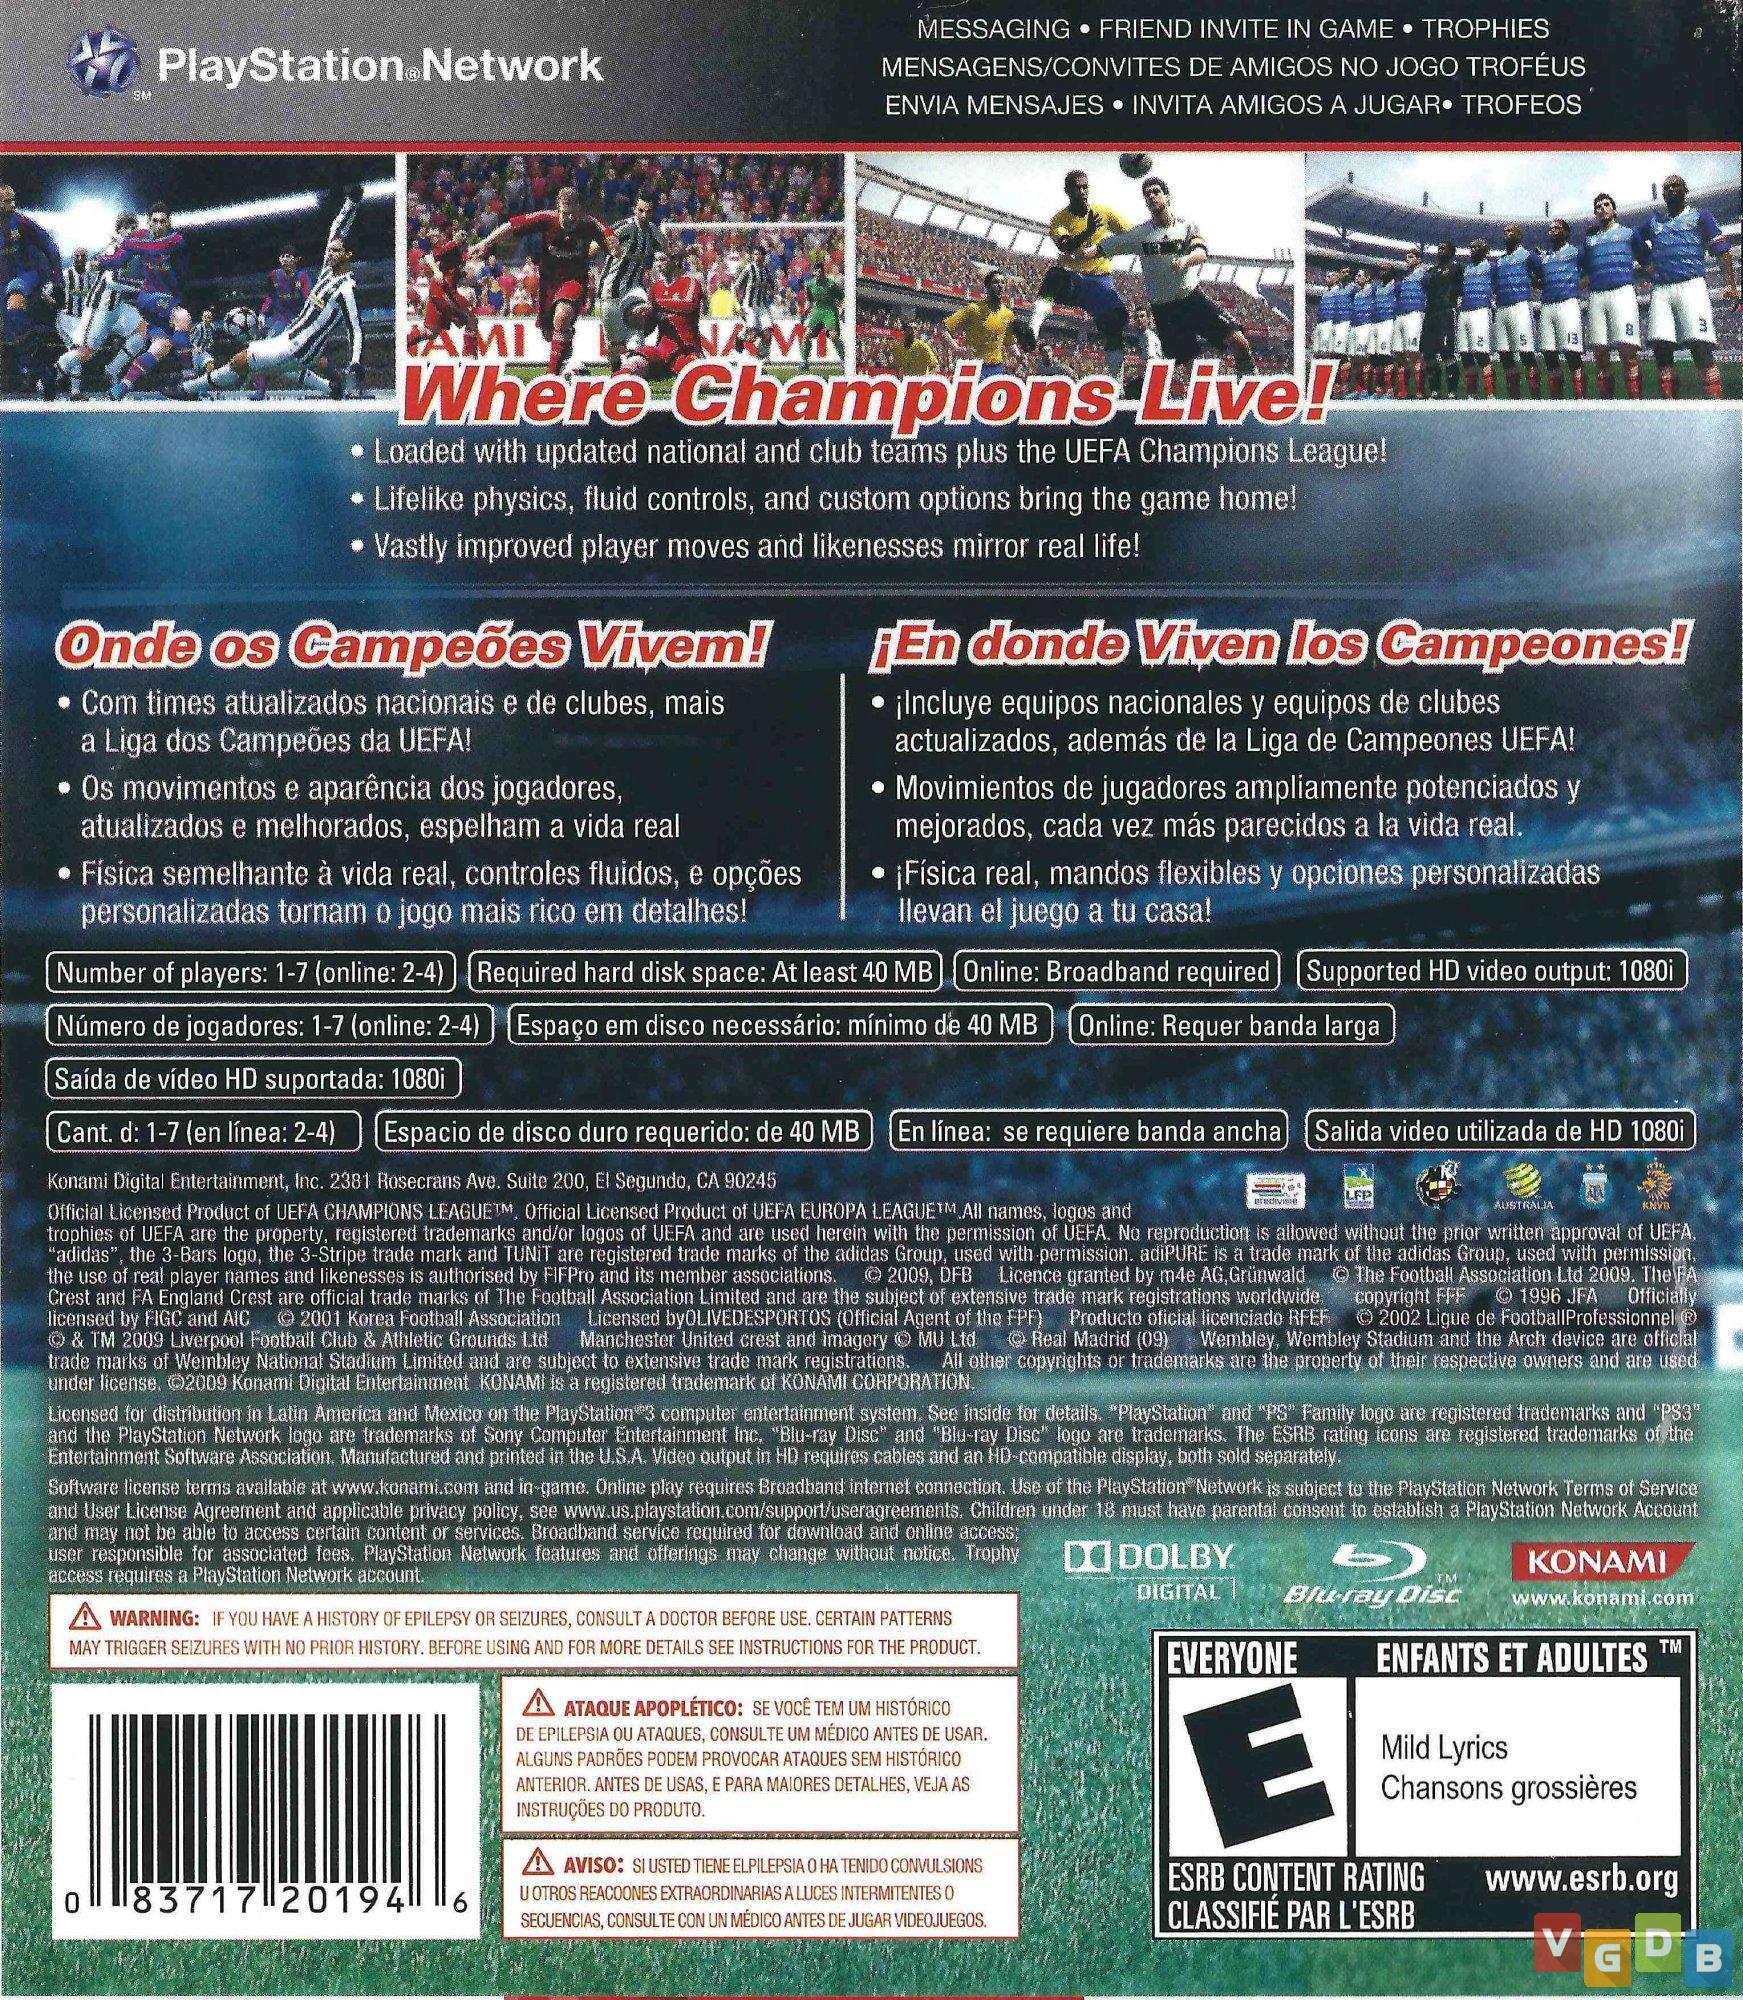 Encarte Loja Games Jogos- Playstation PS5 PS4 [CDR e PDF]